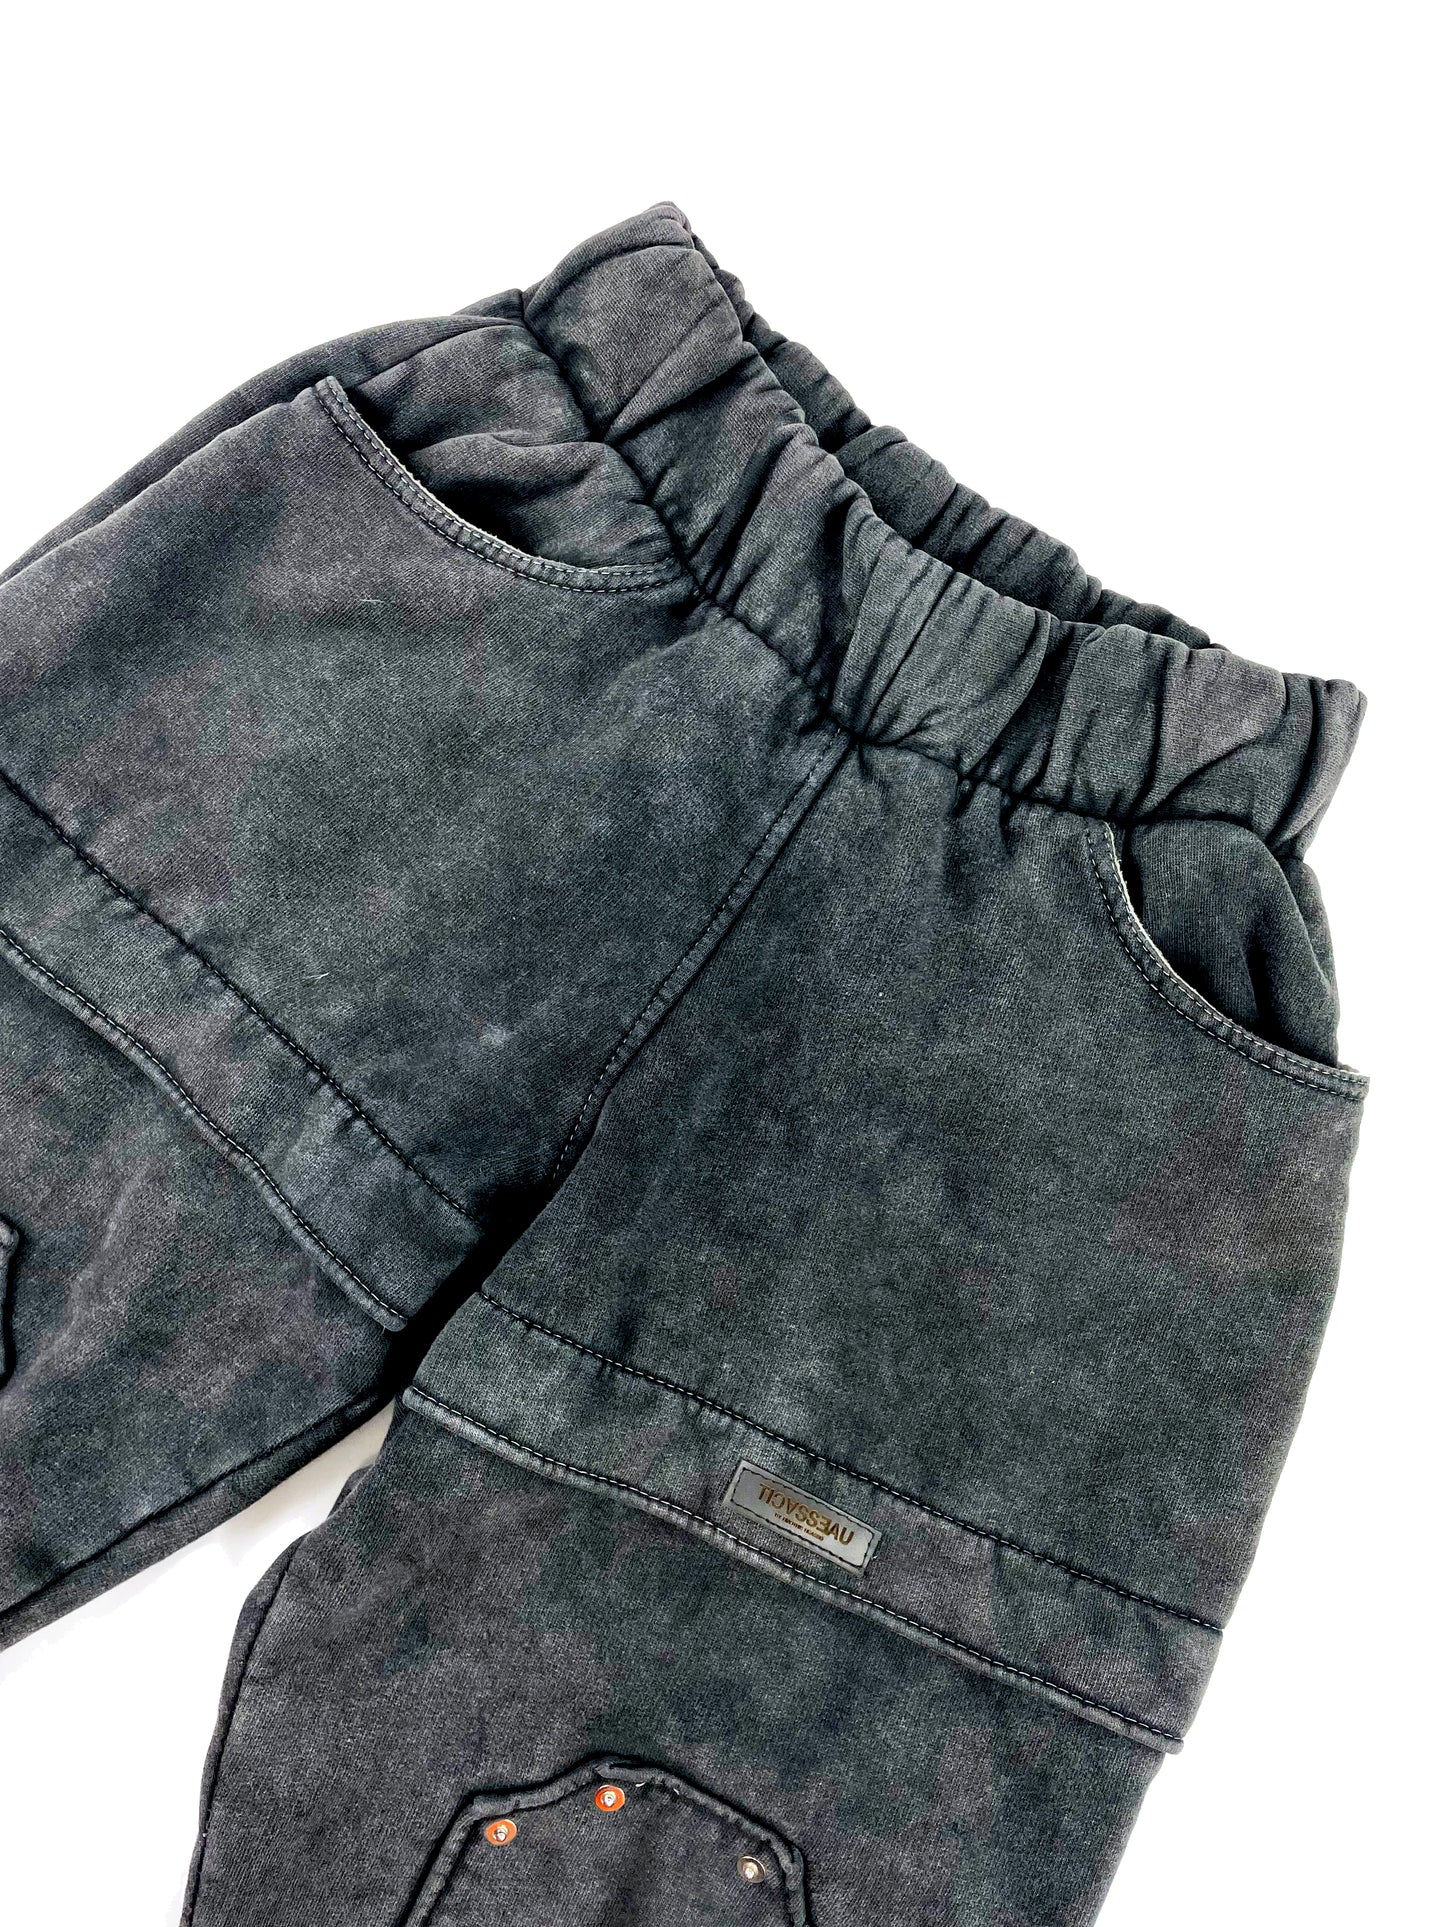 ABSENT CHATTELS - Black Washed Sweatpants